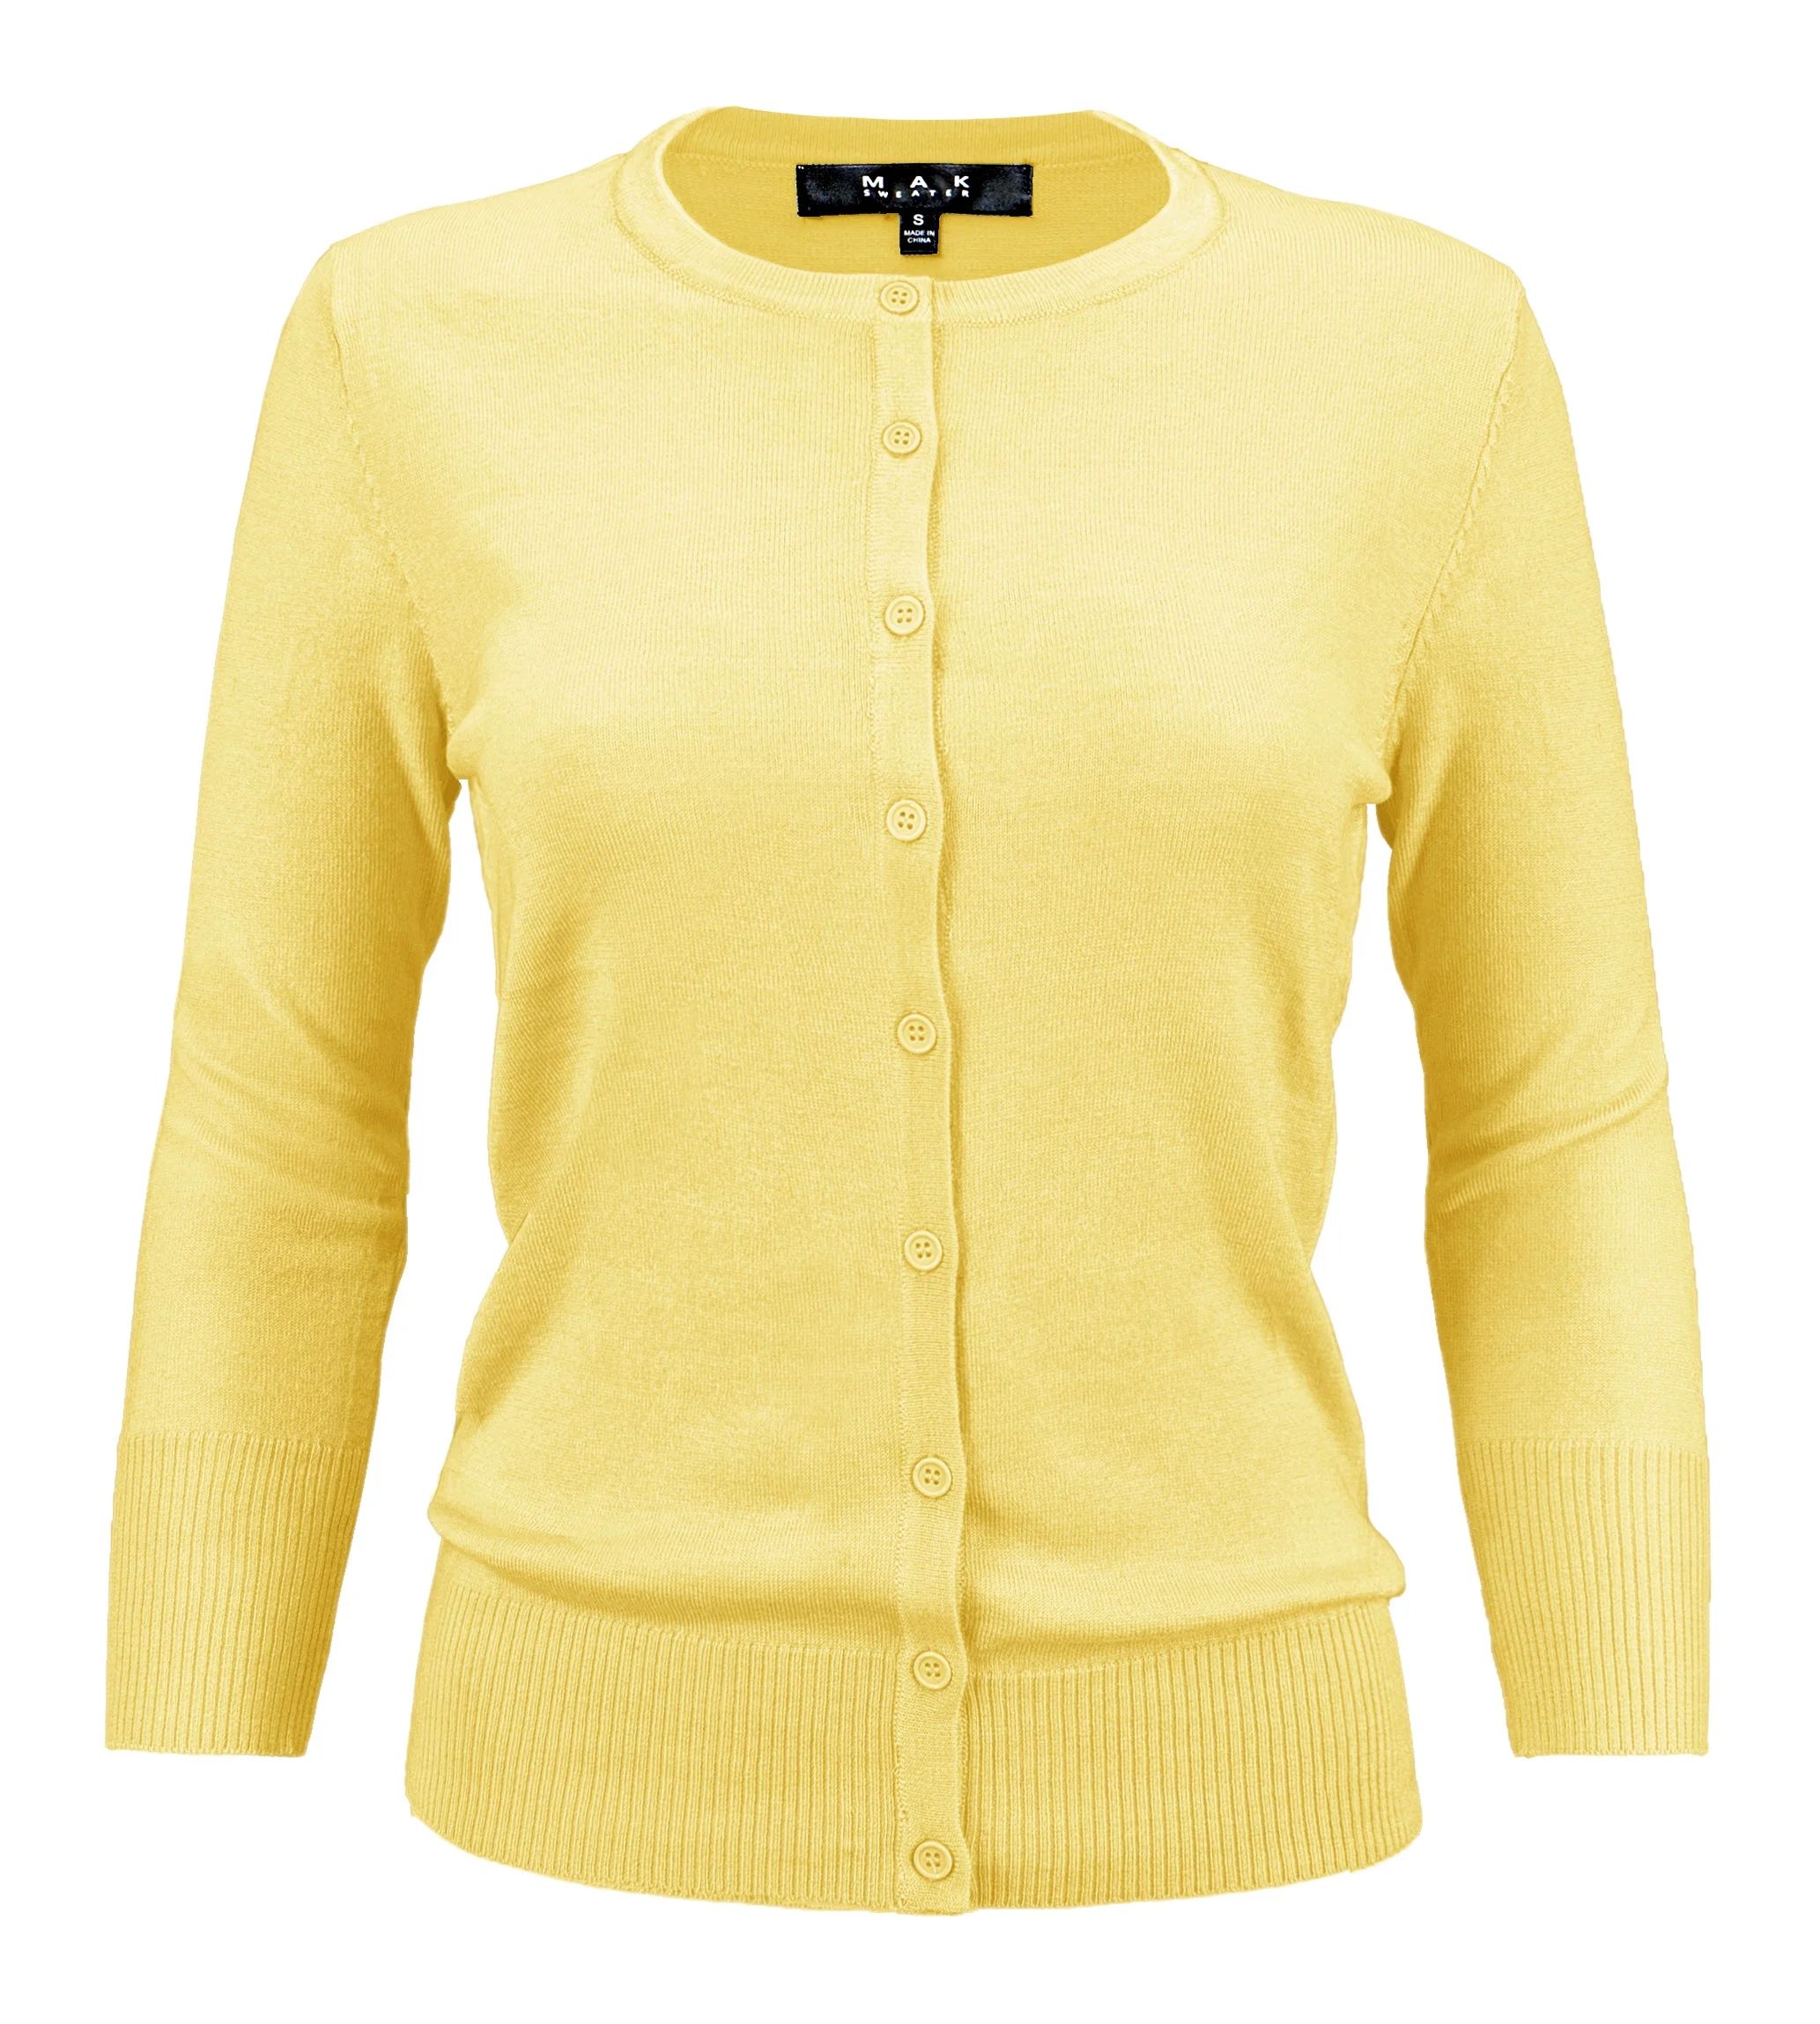 YEMAK Women's Knit Cardigan Sweater – 3/4 Sleeve Crewneck Basic Classic Casual Button Down Soft... | Walmart (US)